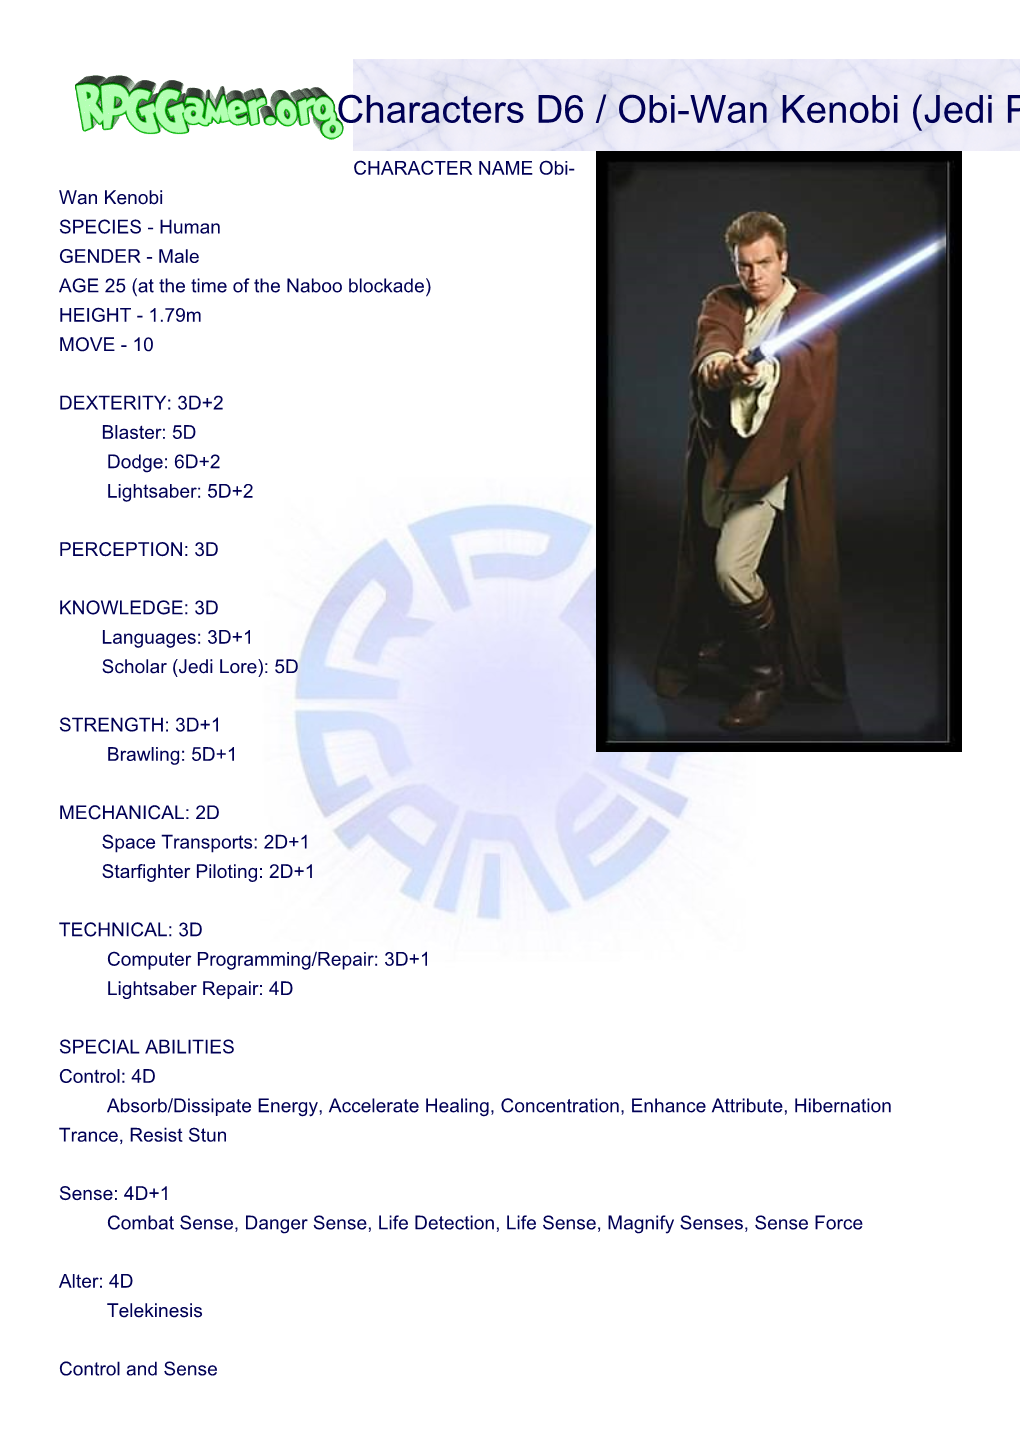 Characters D6 / Obi-Wan Kenobi (Jedi Padawan As of the Battle of Naboo)